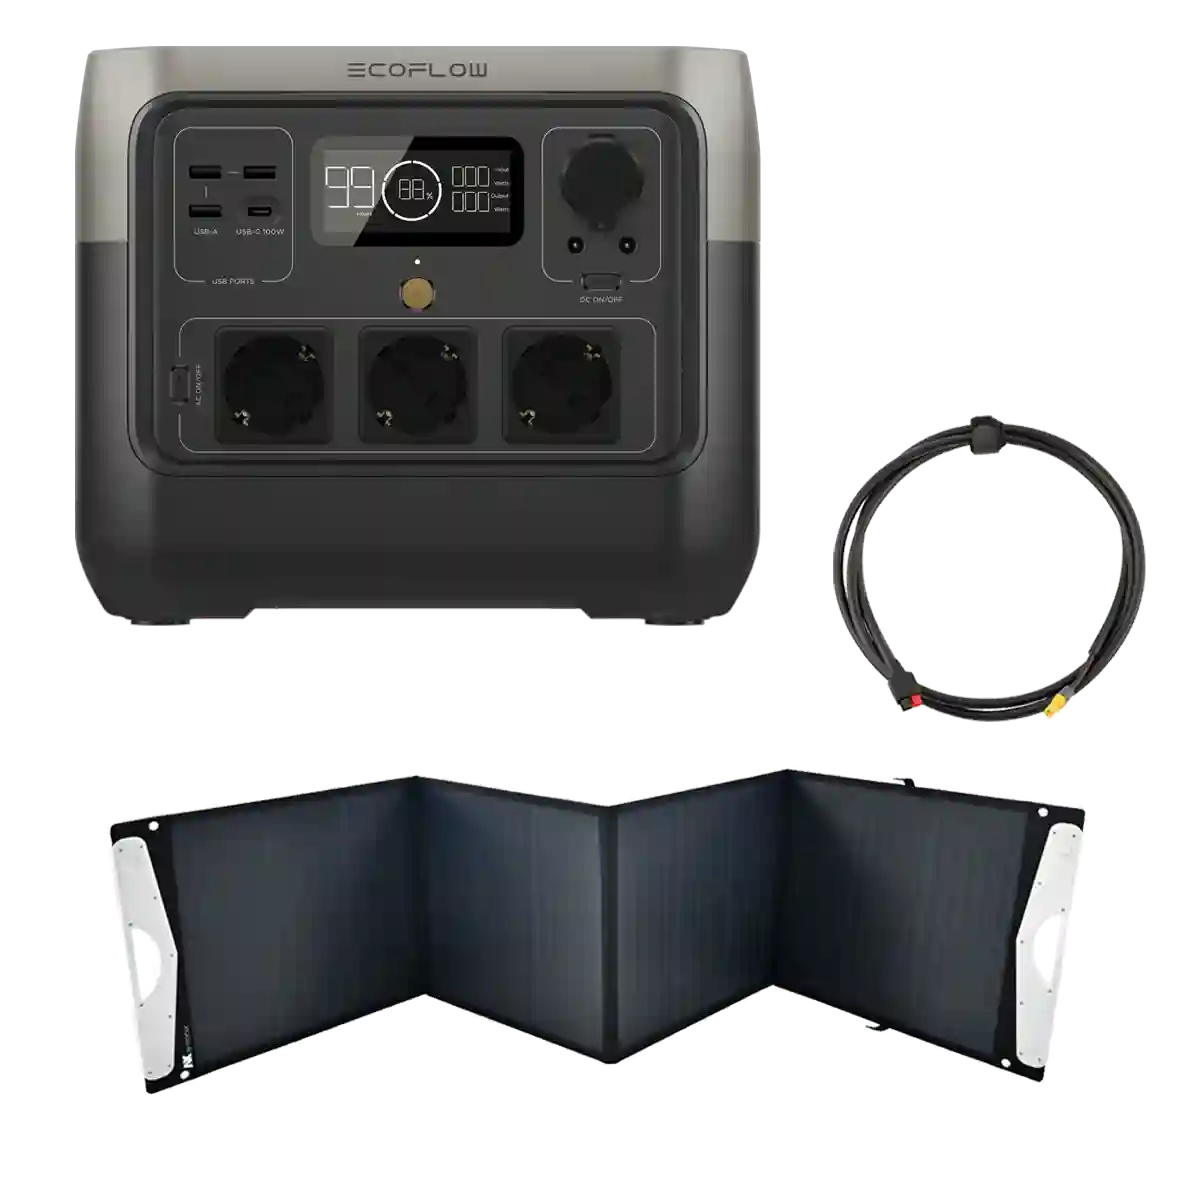 Acquista Caricabatterie per auto da 75 W Carica rapida 3.0 15A Caricatore  USB a 6 porte per caricabatterie per telefono cellulare